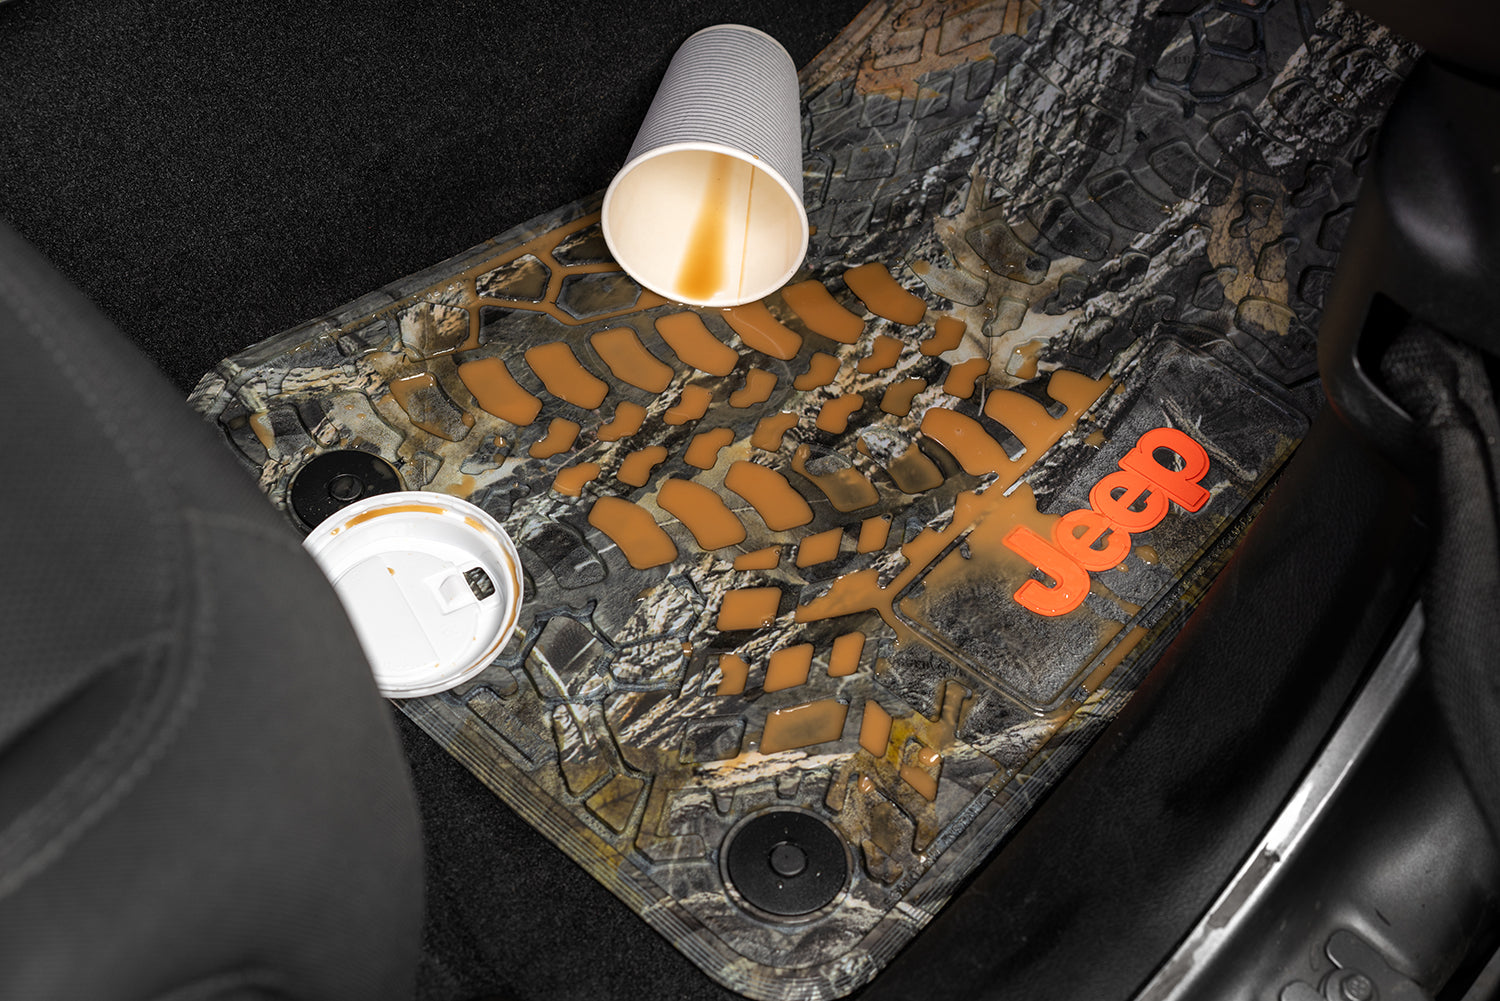 Jeep Floor Mats 14-18 Jeep Wrangler JK 2 Dr 2 Piece Tire Tread/Scorched Earth Scene w/ Wrangler Insert - Rugged Woods w/ White insert FlexTread